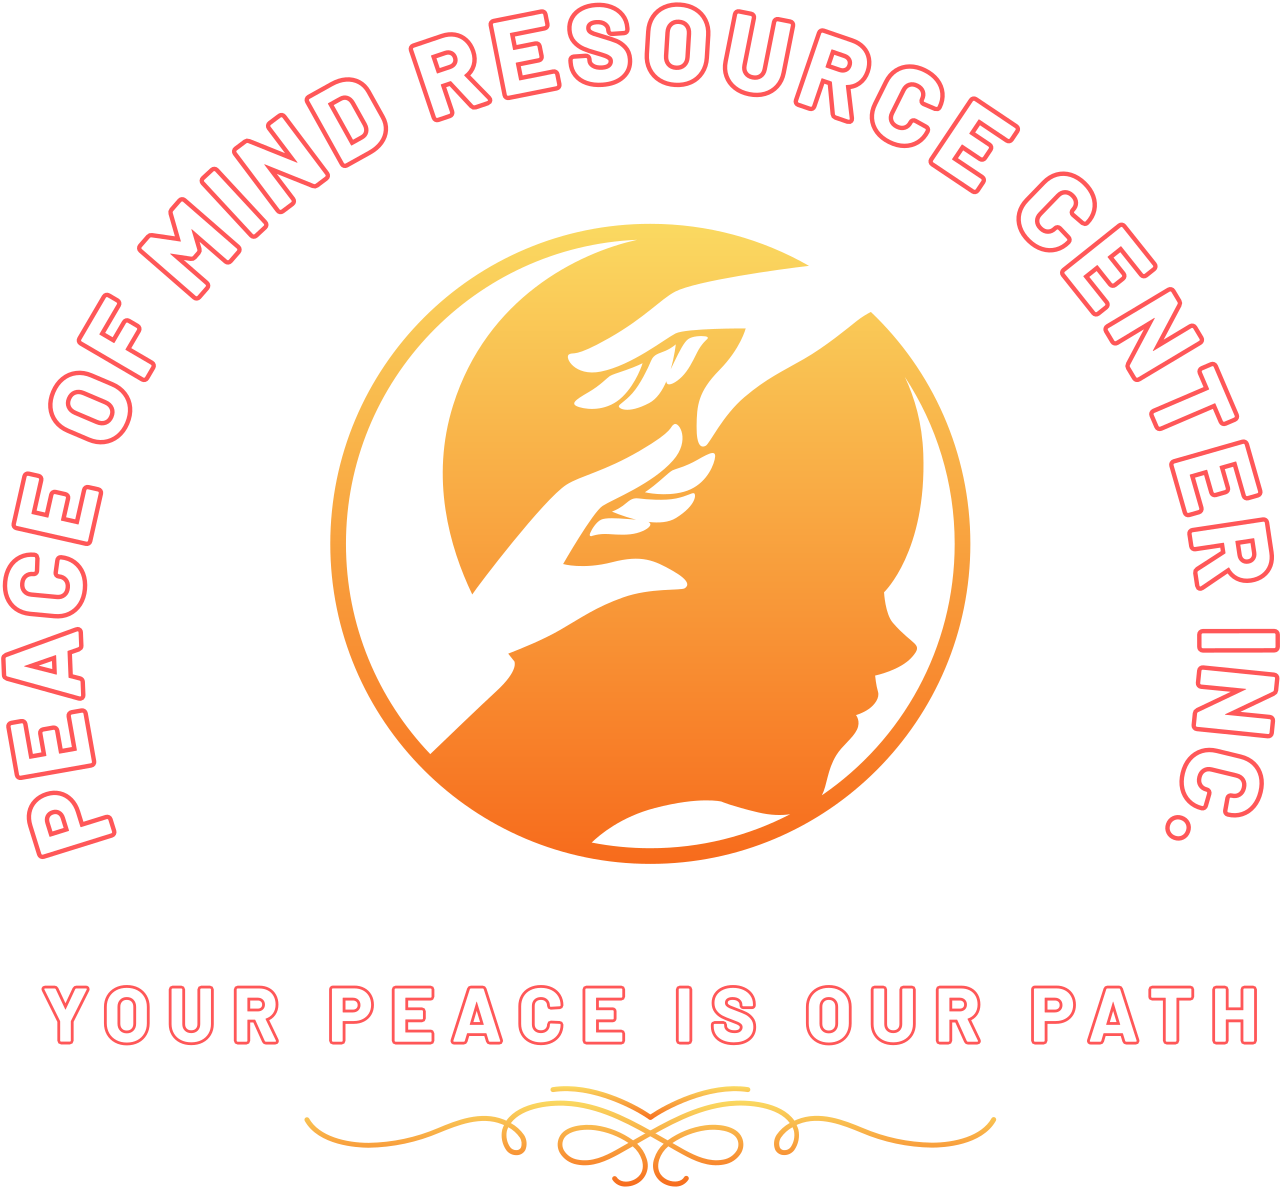 PEACE OF MIND RESOURCE CENTER INC.'s logo